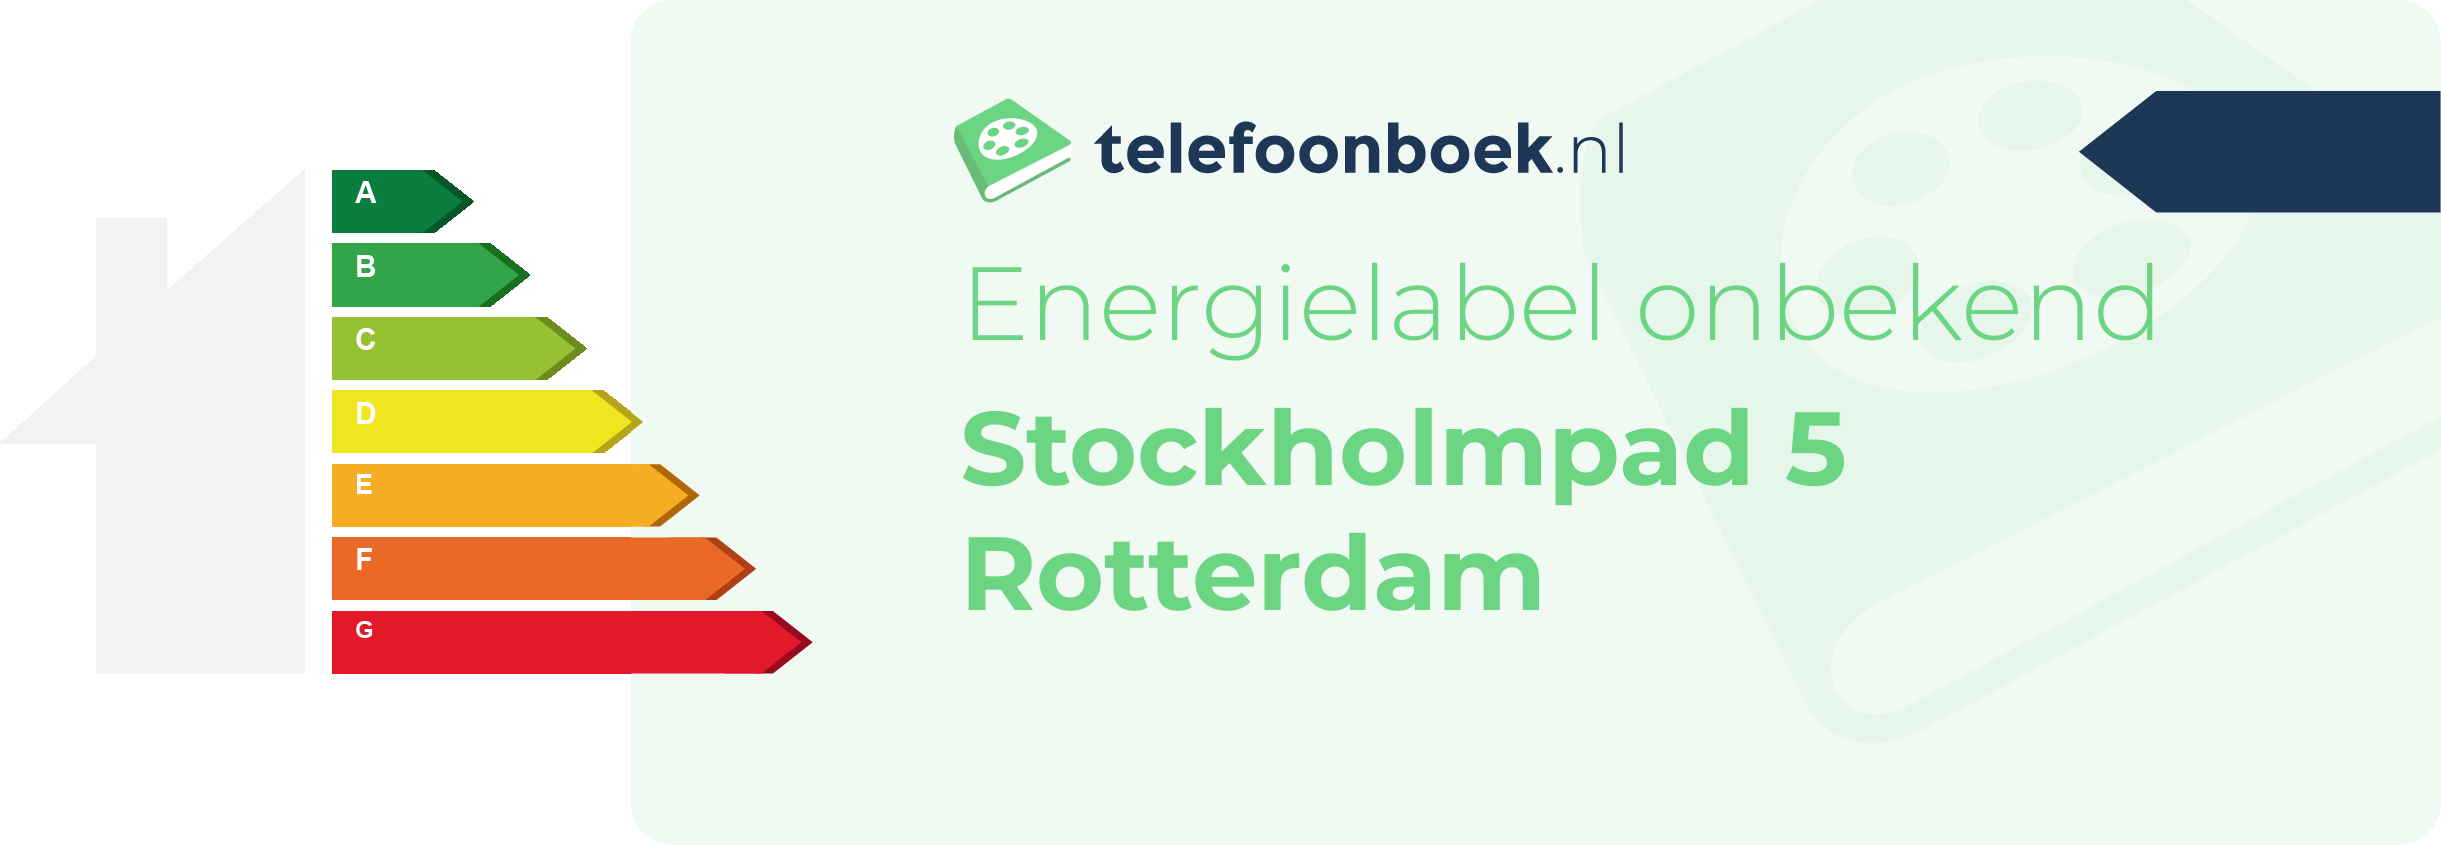 Energielabel Stockholmpad 5 Rotterdam